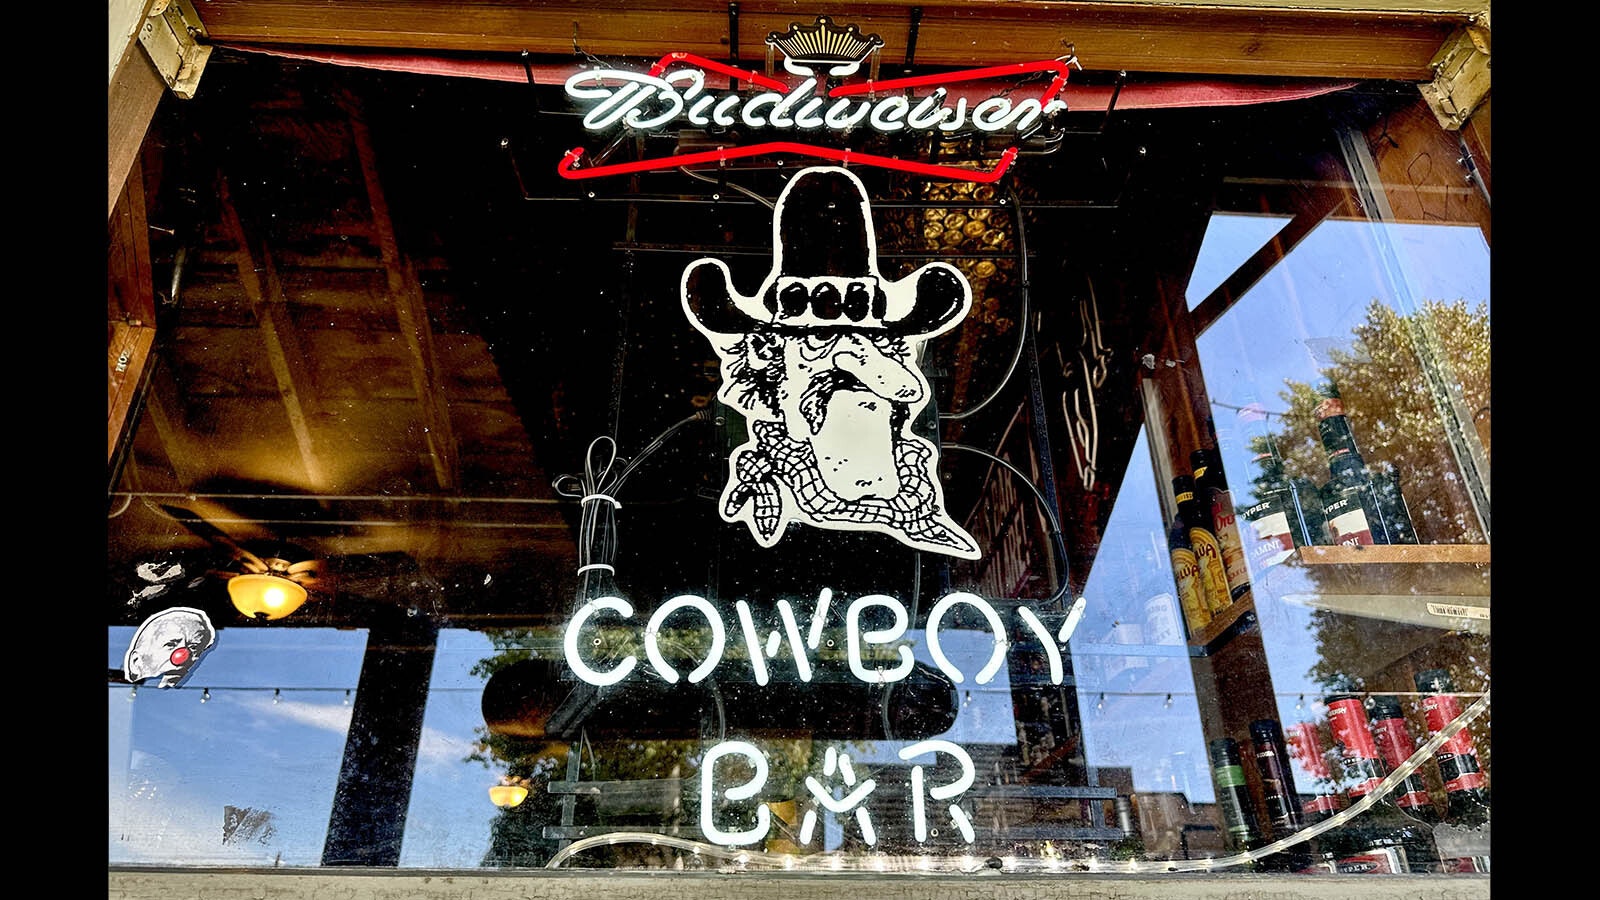 Meeteetsee Cowboy Bar 2 8 5 23